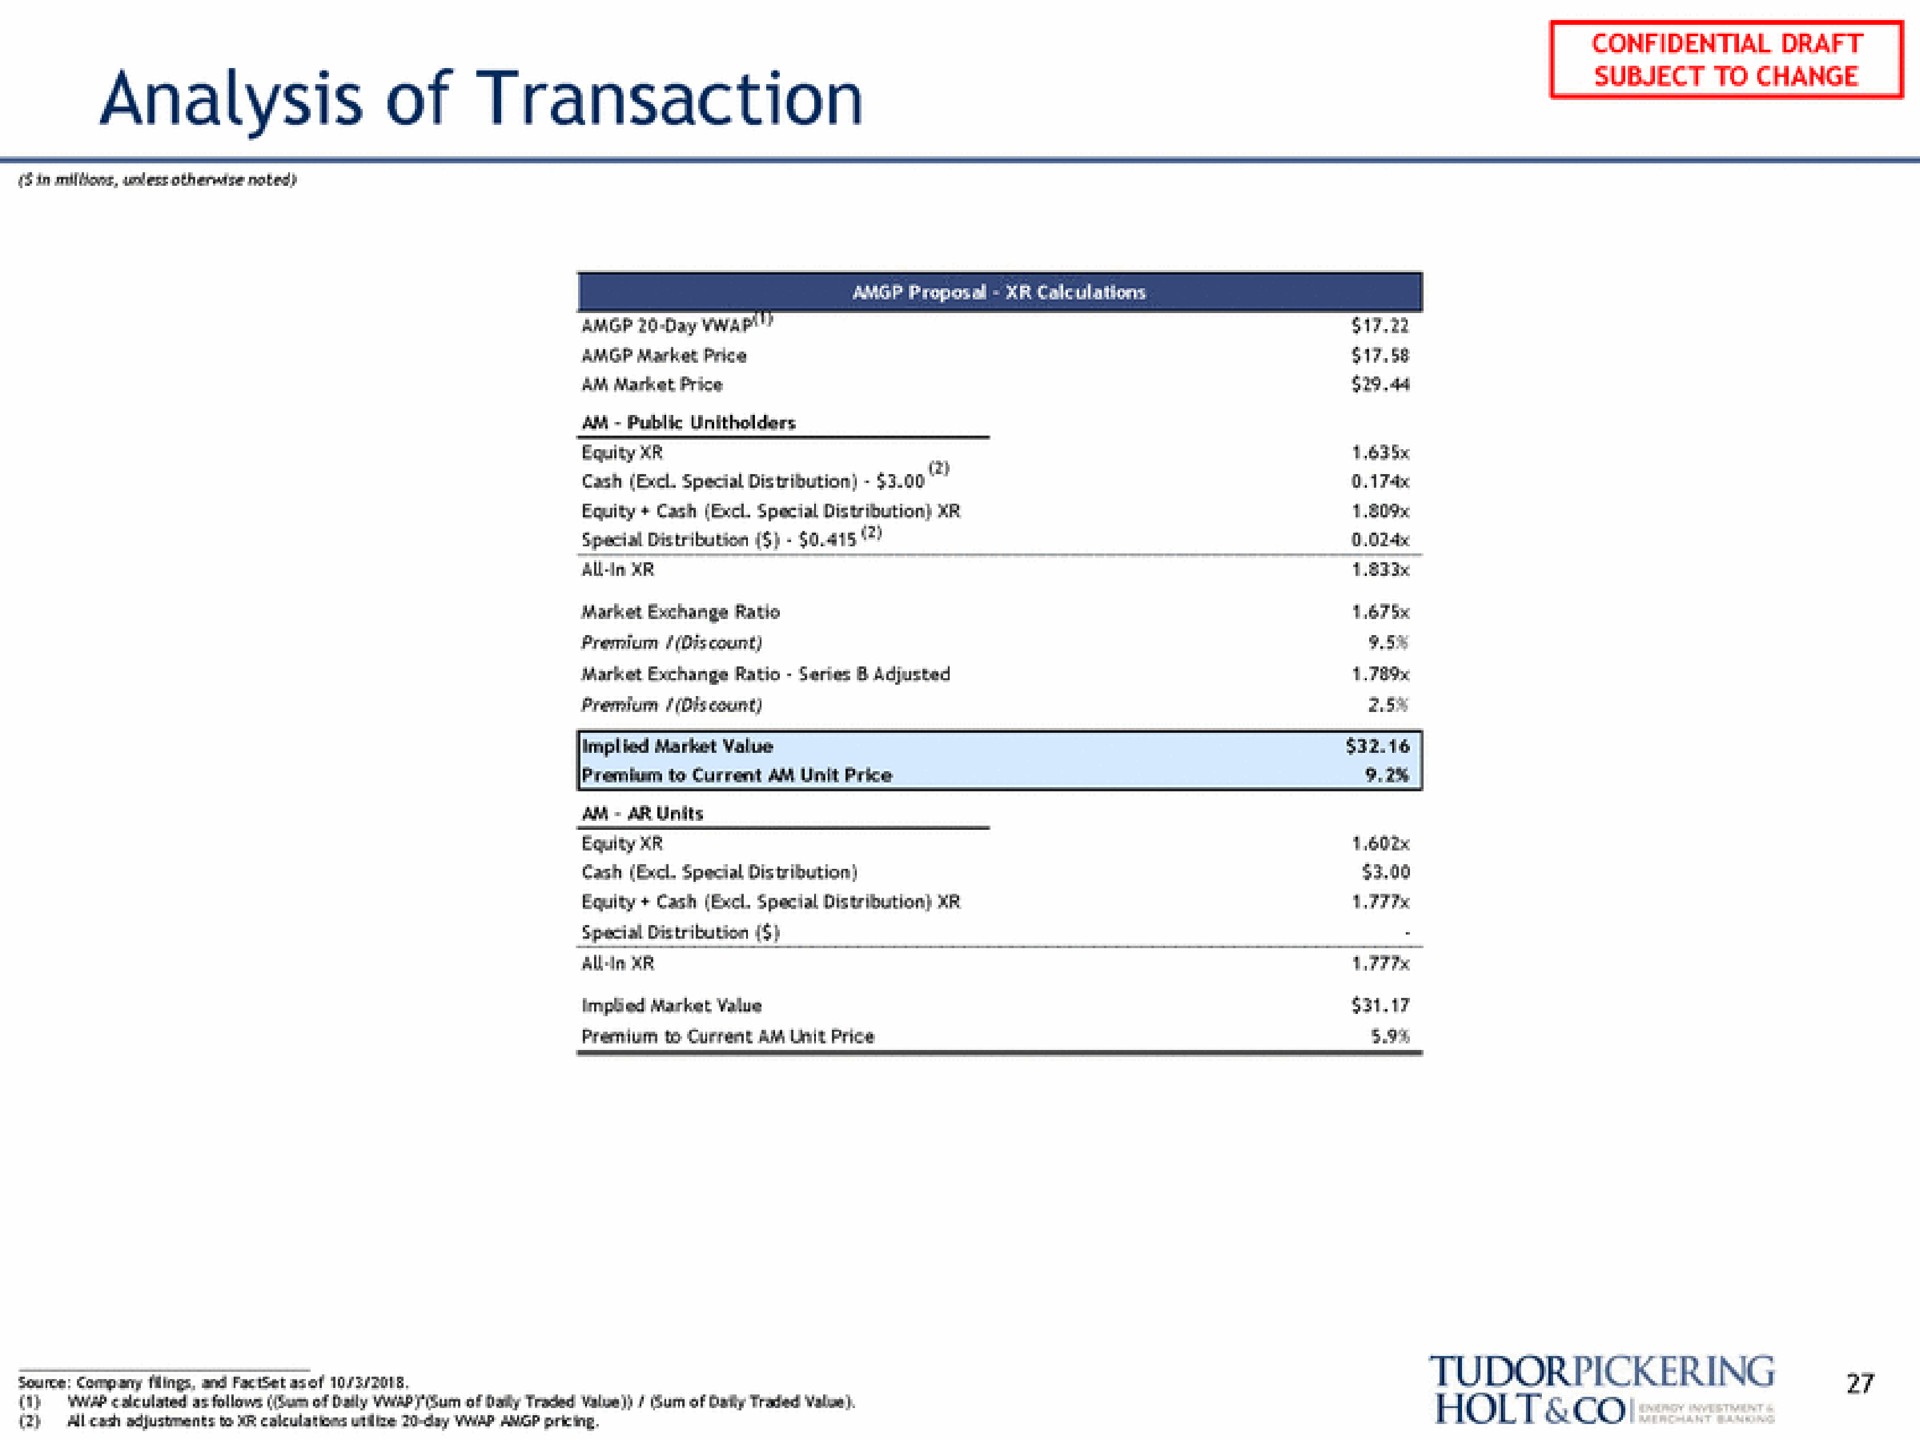 analysis of transaction | Tudor, Pickering, Holt & Co